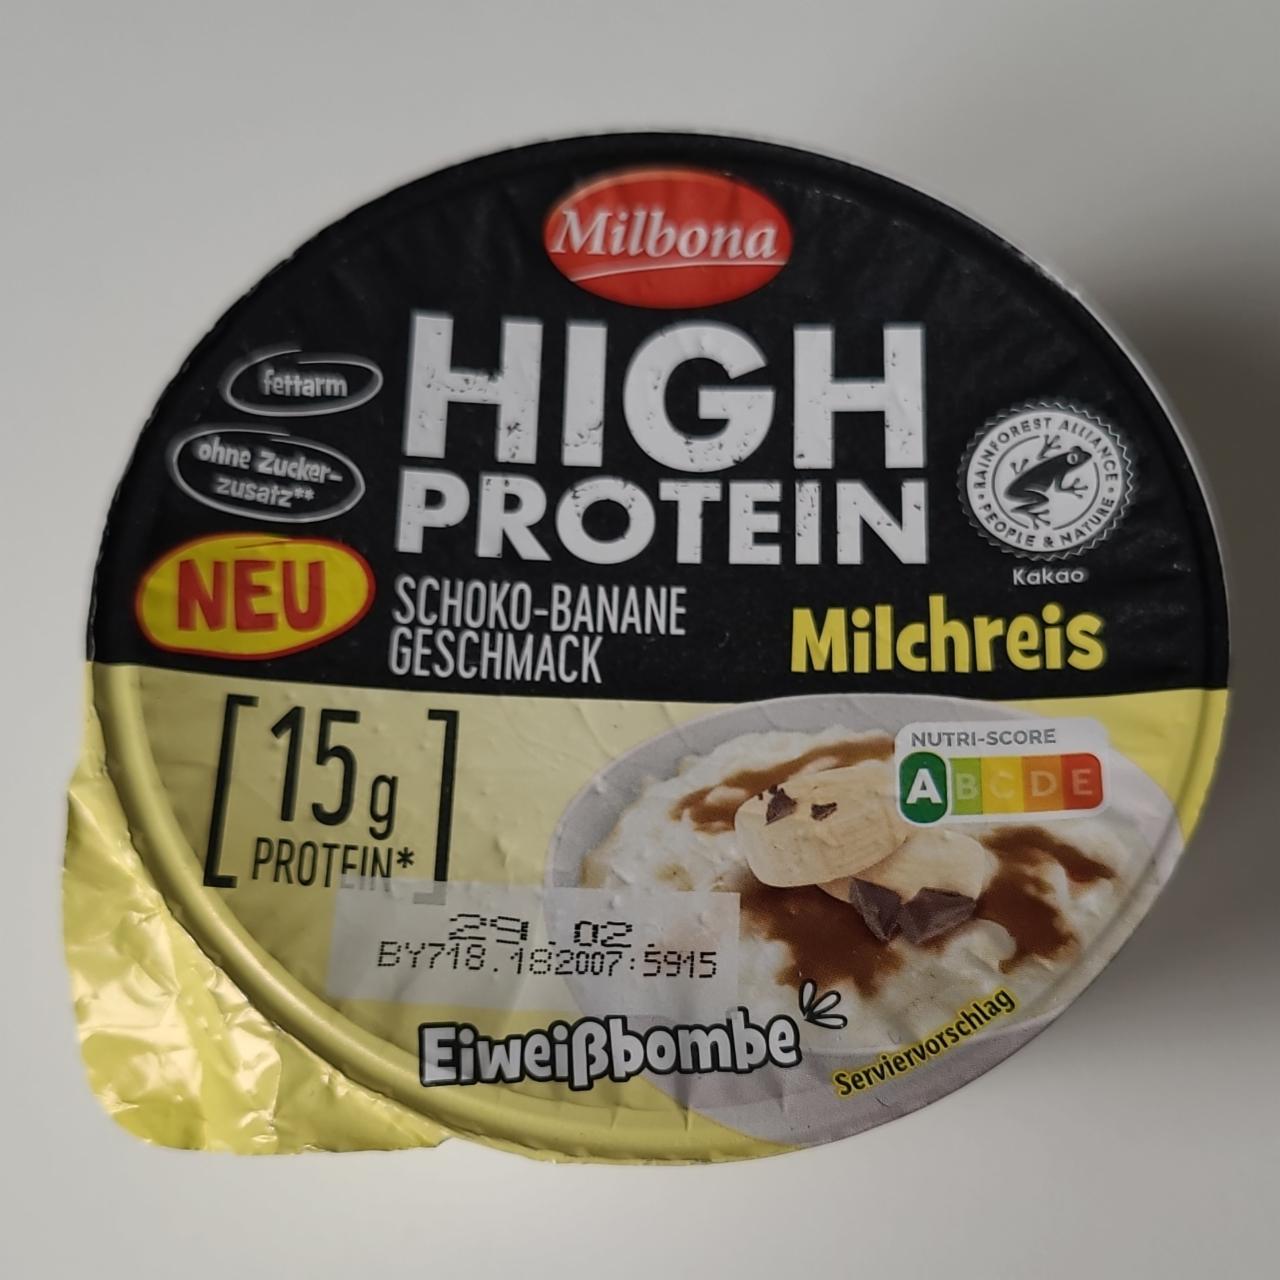 Fotografie - High Protein Milchreis Schoko-Banane geschmack Eiweißbombe Milbona